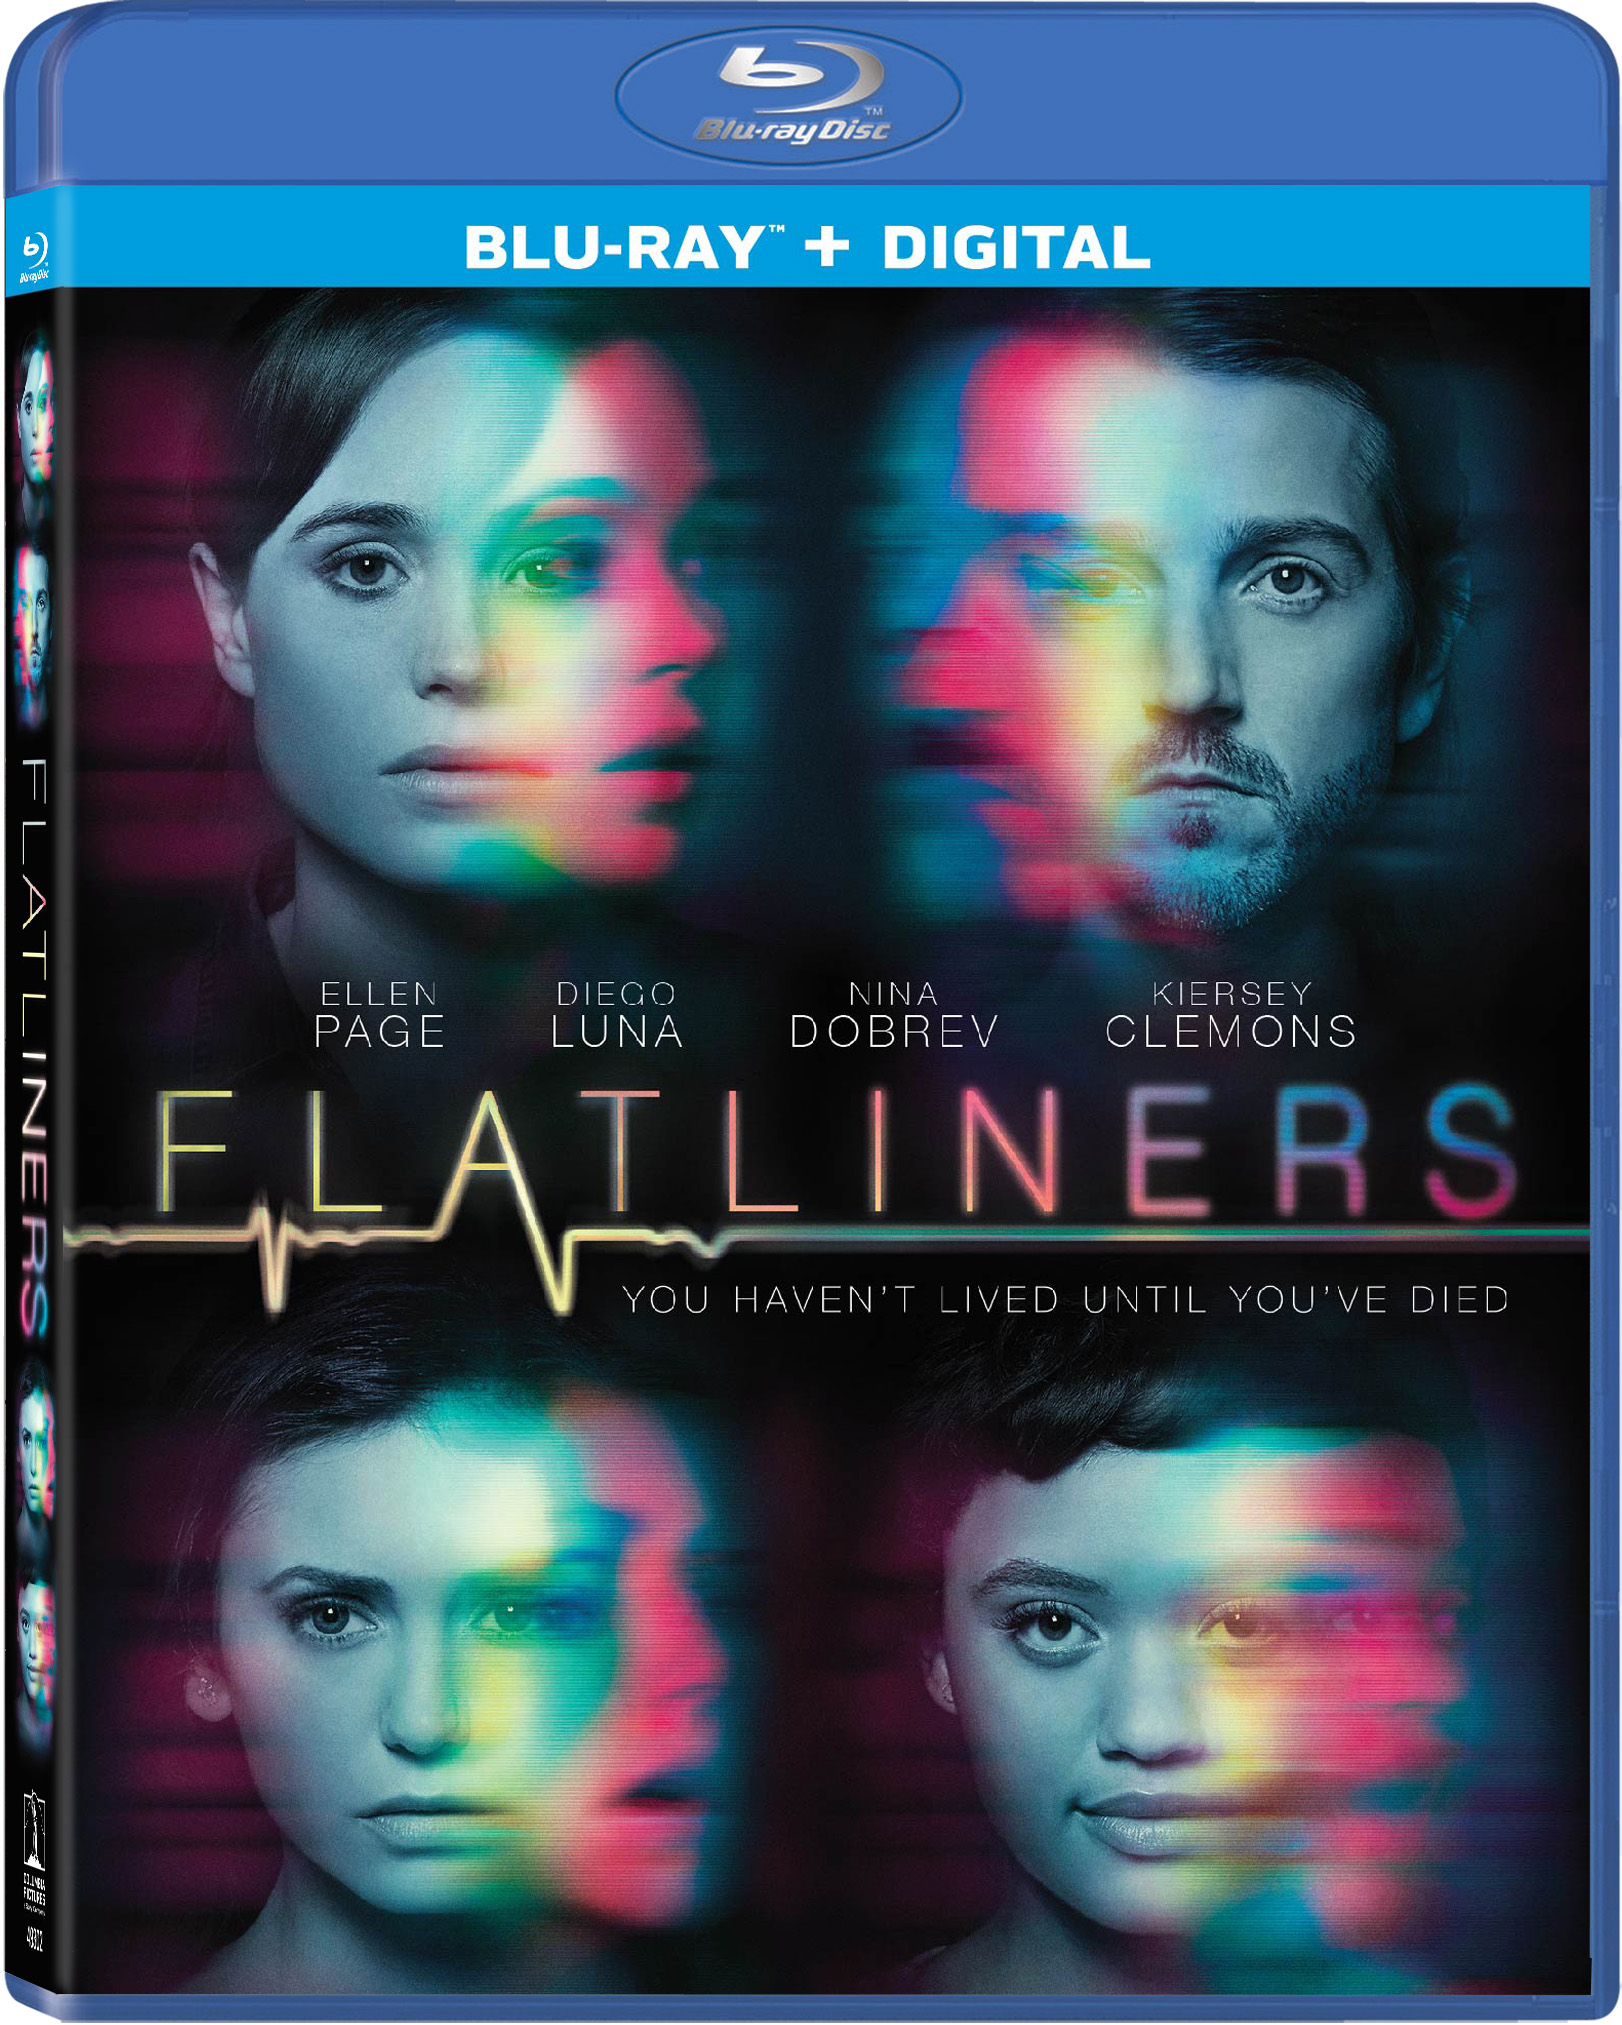 Flatliners Blu-ray Cover